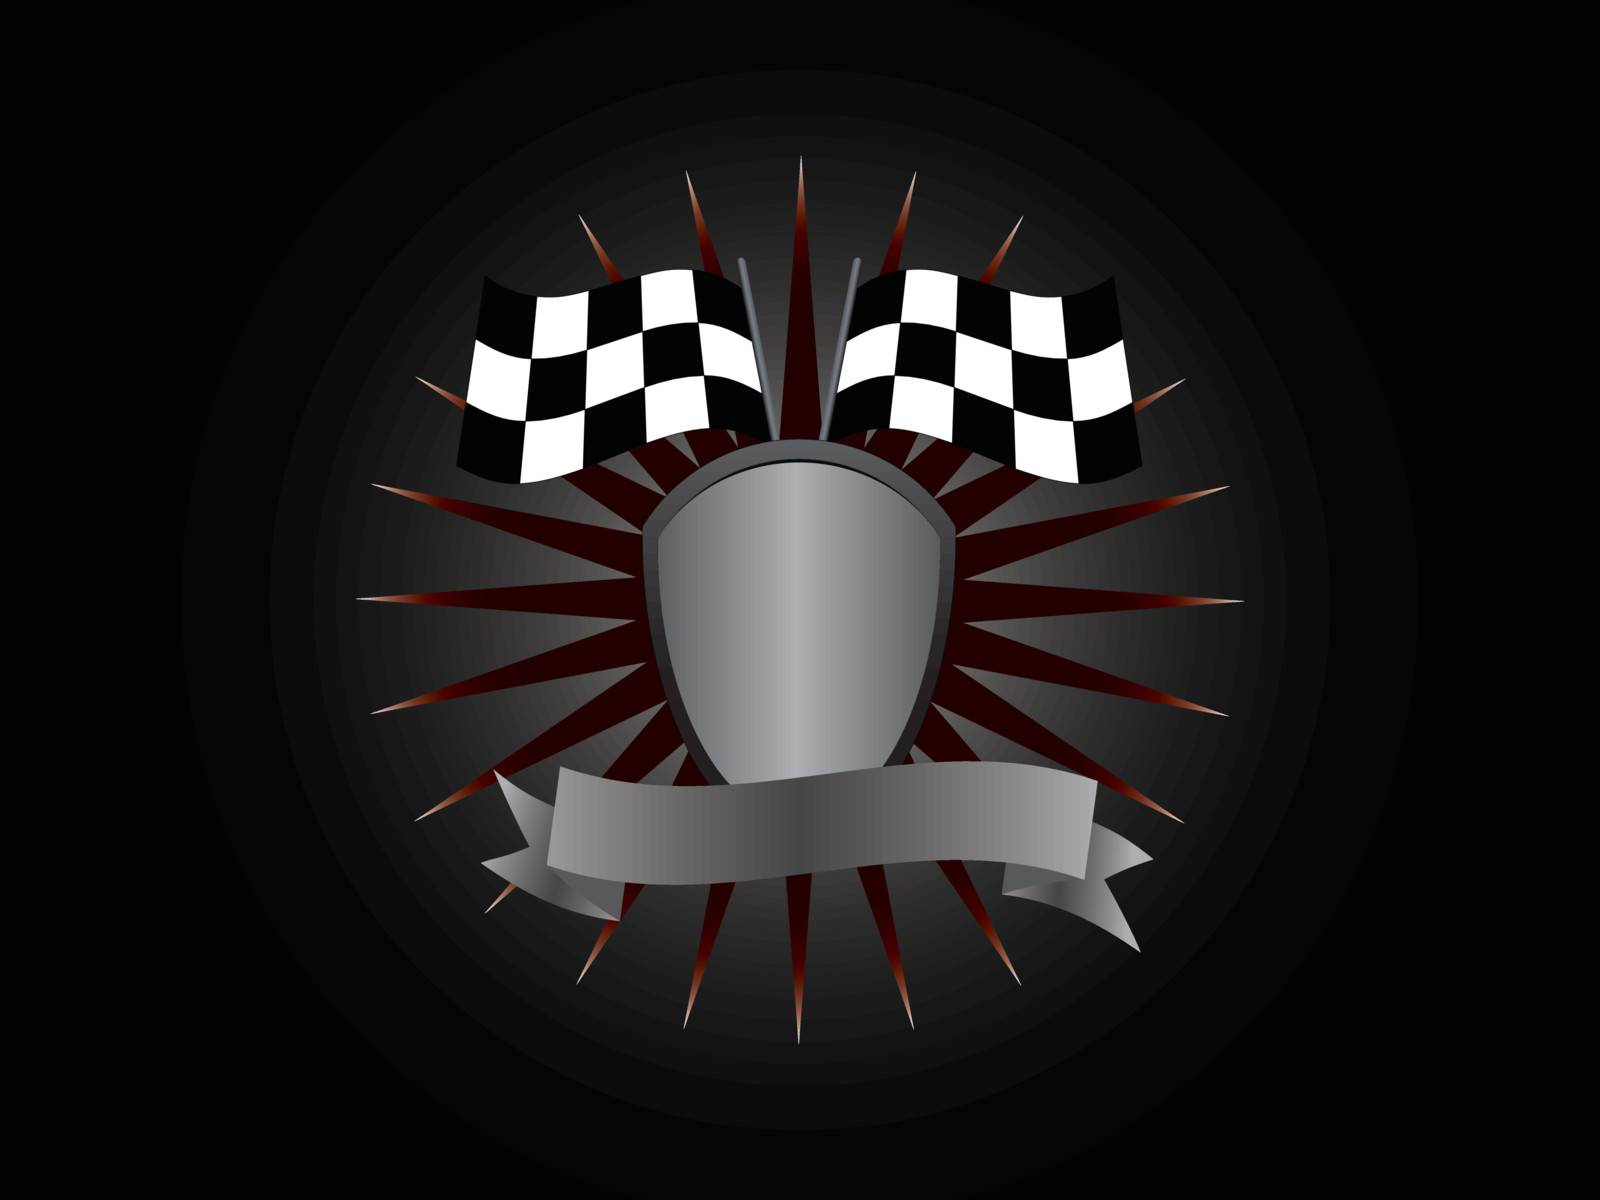 The emblem of the winner, shield, flag, banner, lettering on a black background.